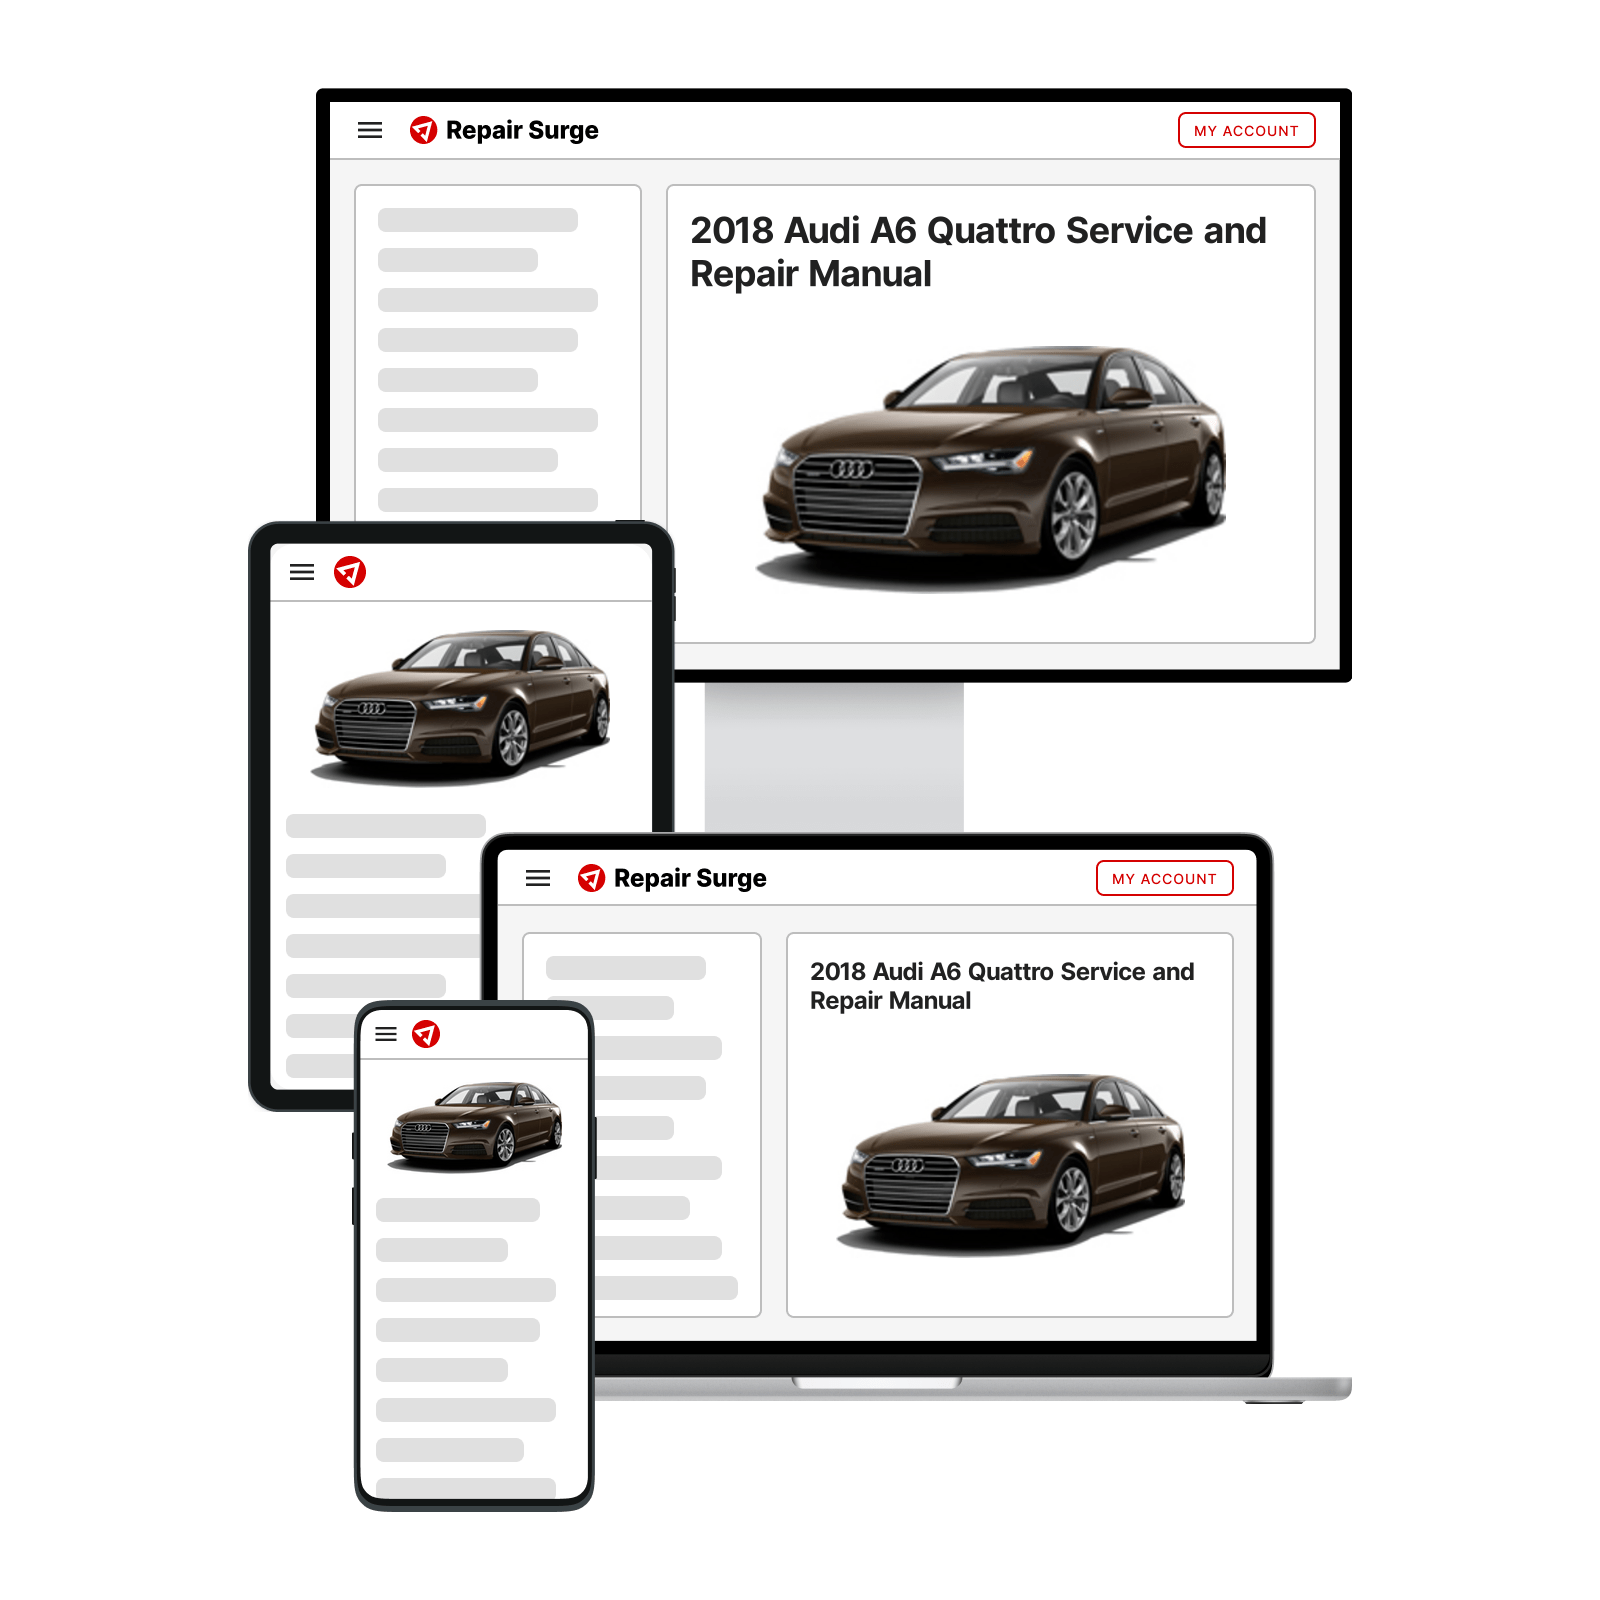 2018 Audi A6 Quattro service and repair manual hero image